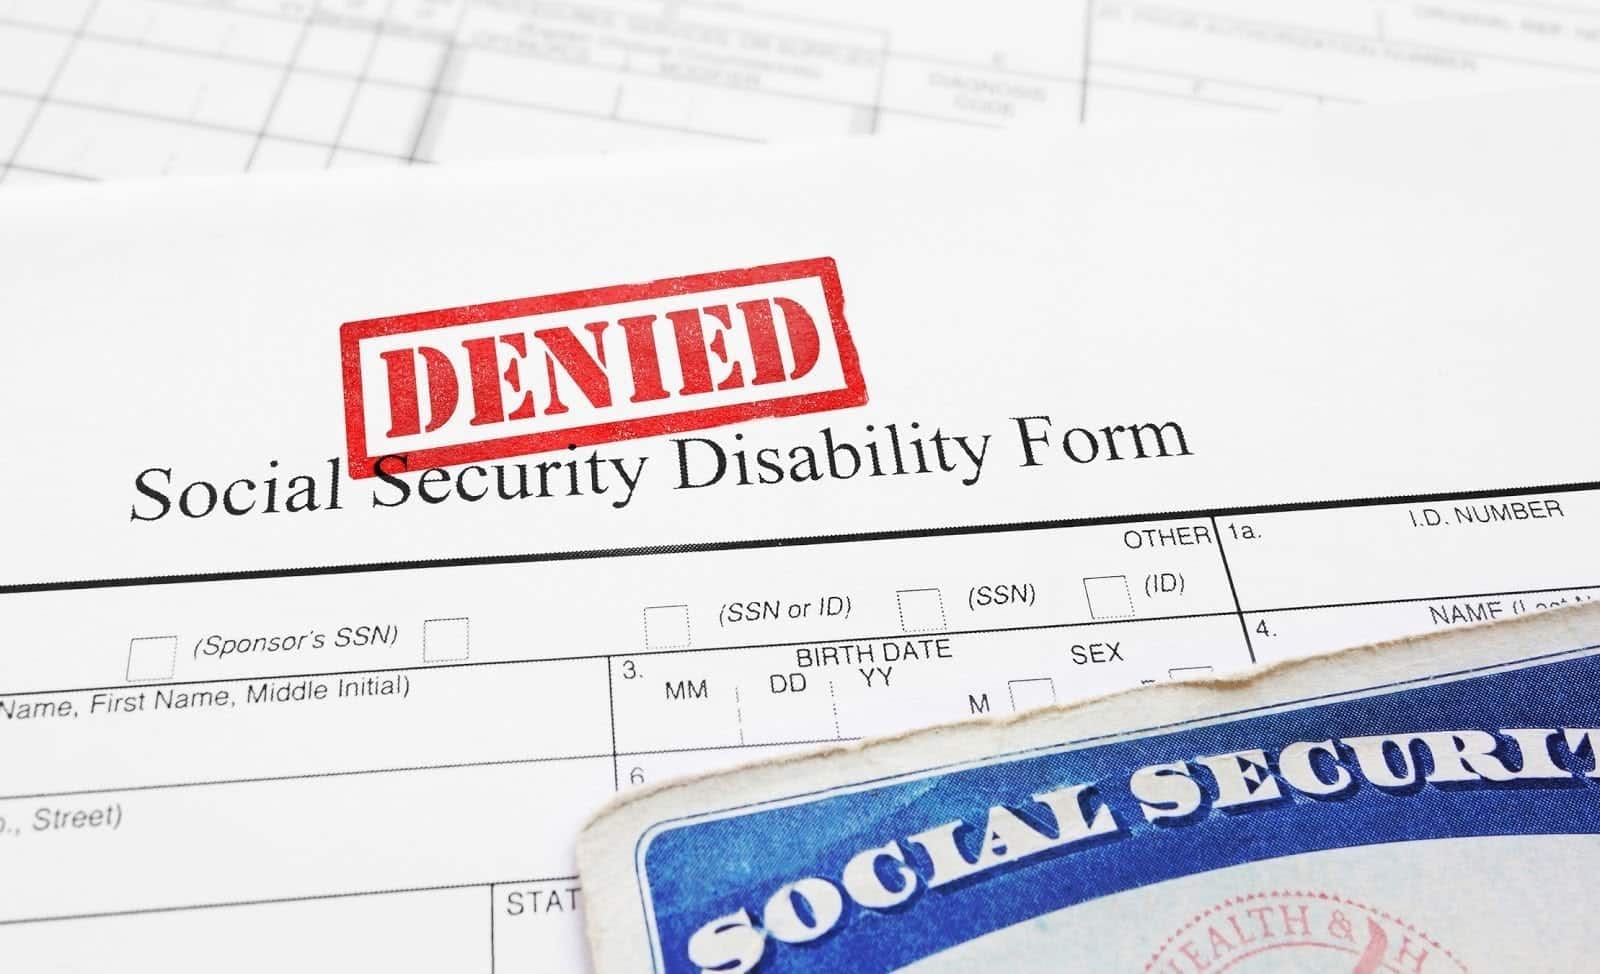 Denied Social Security Disability Form